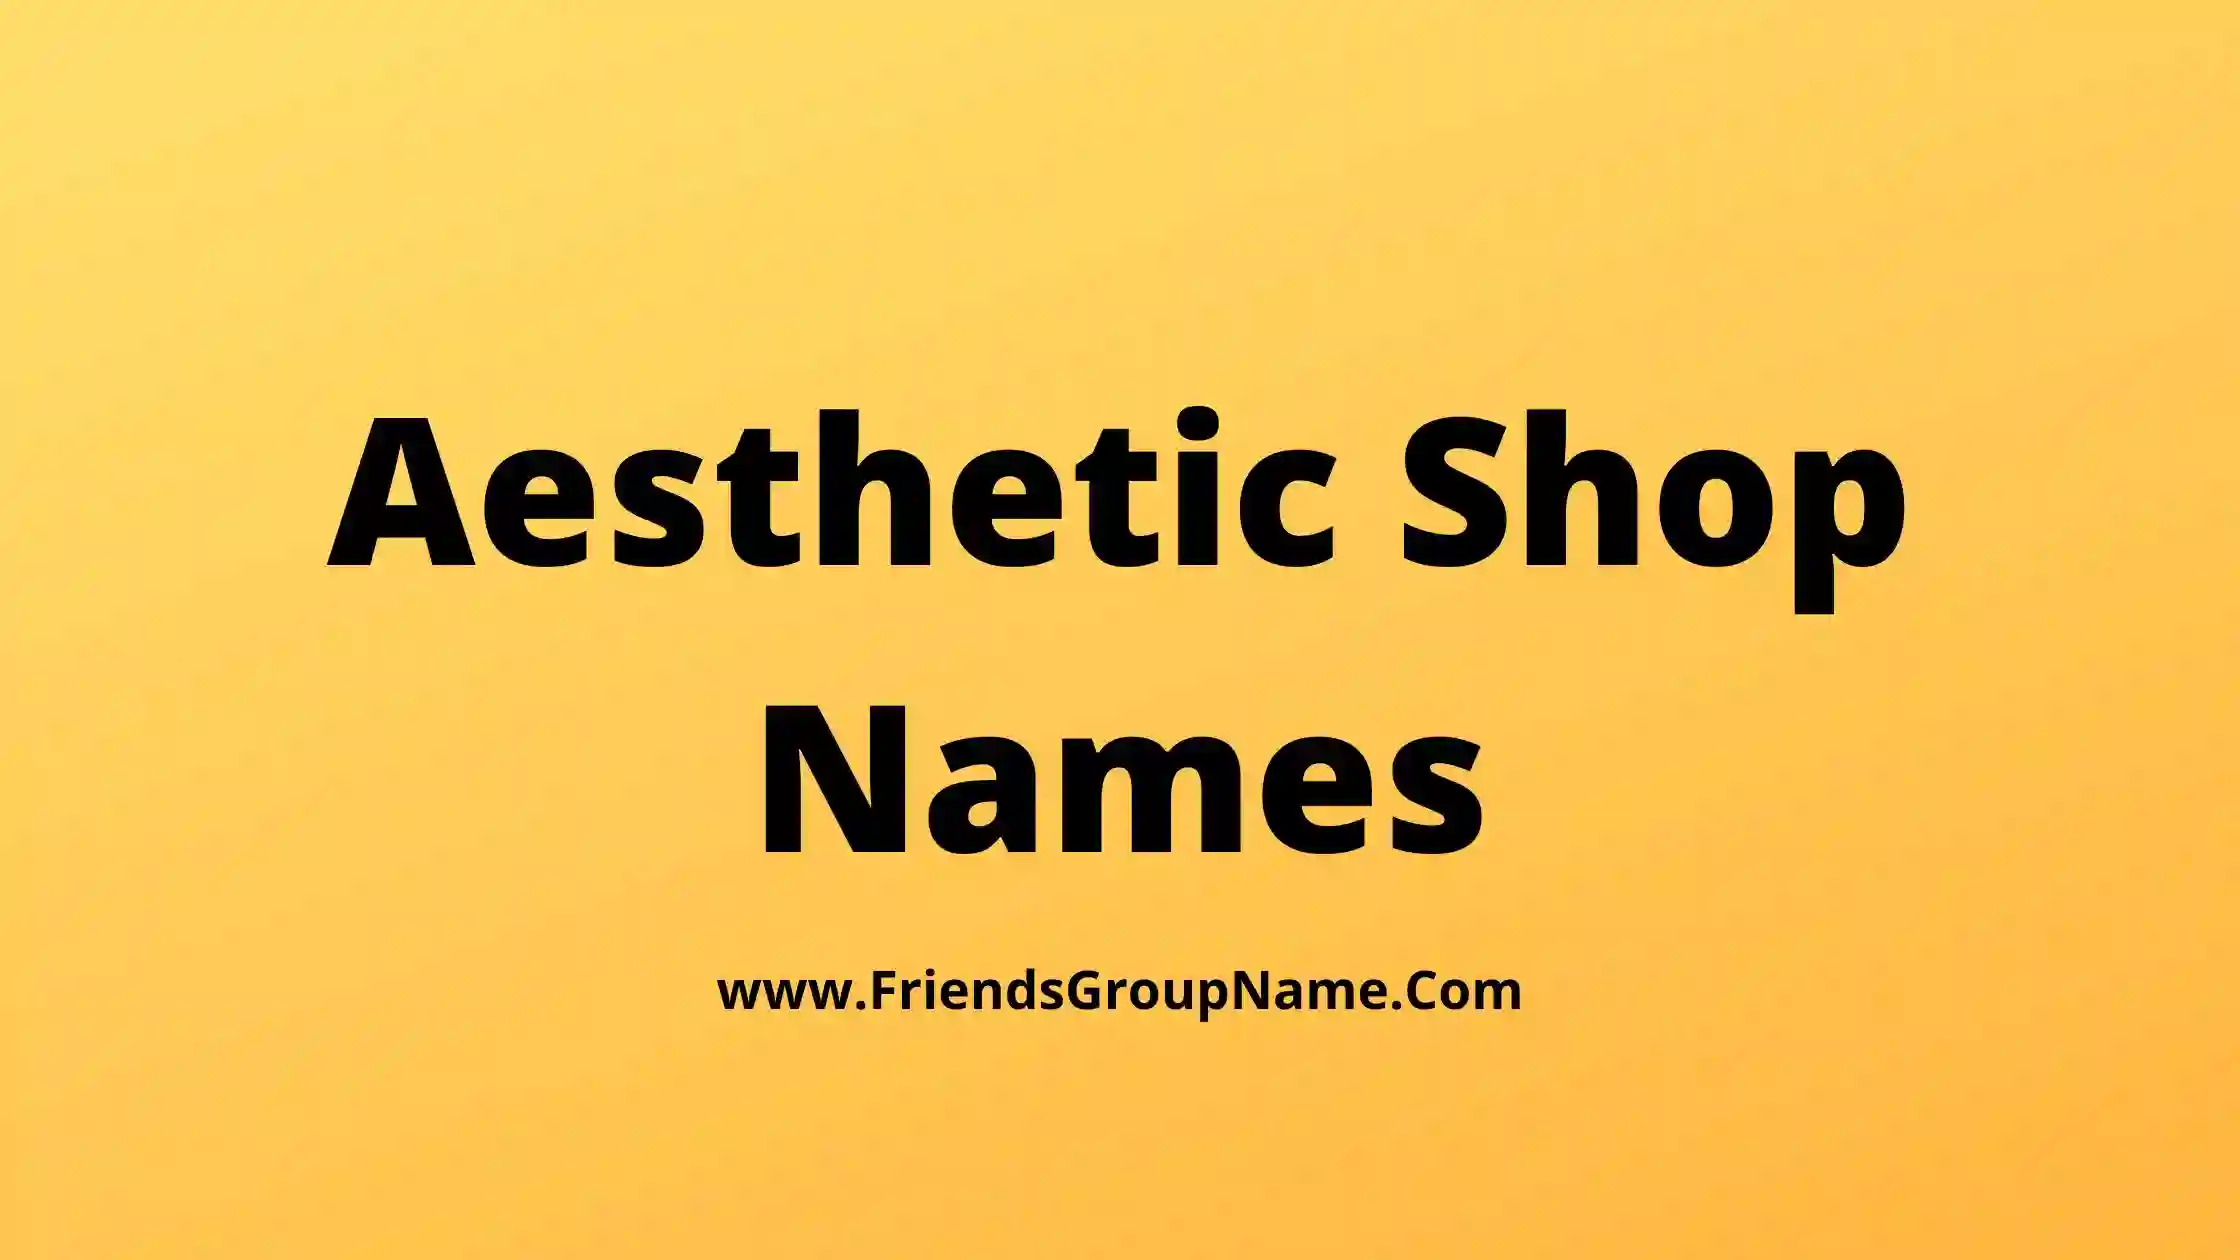 Aesthetic Shop Names